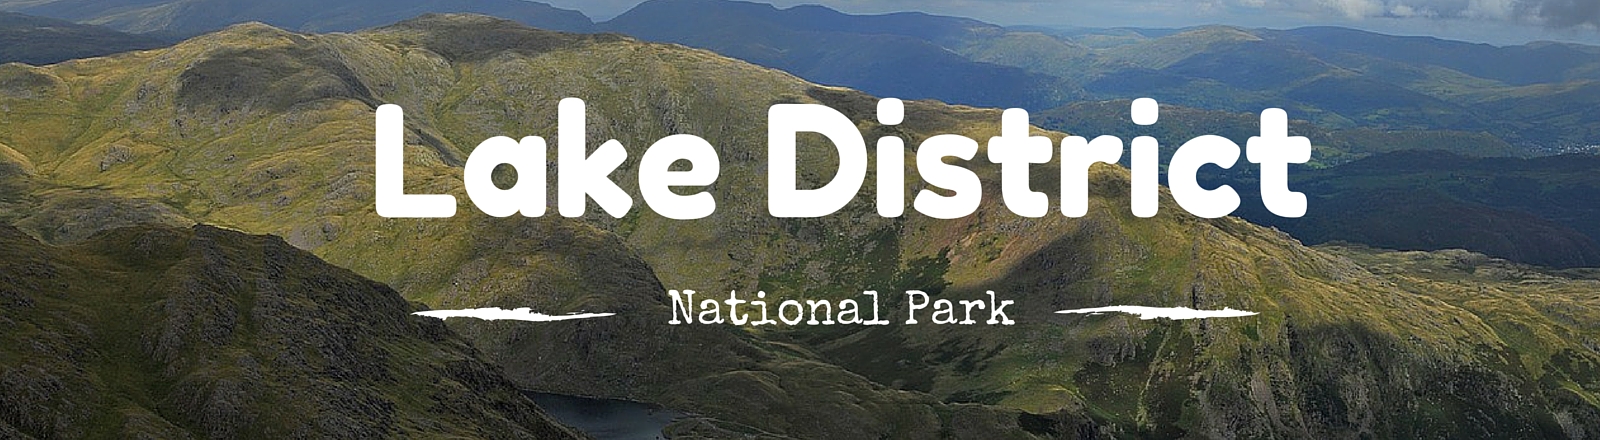 Lake District National Park | National Parks Guy